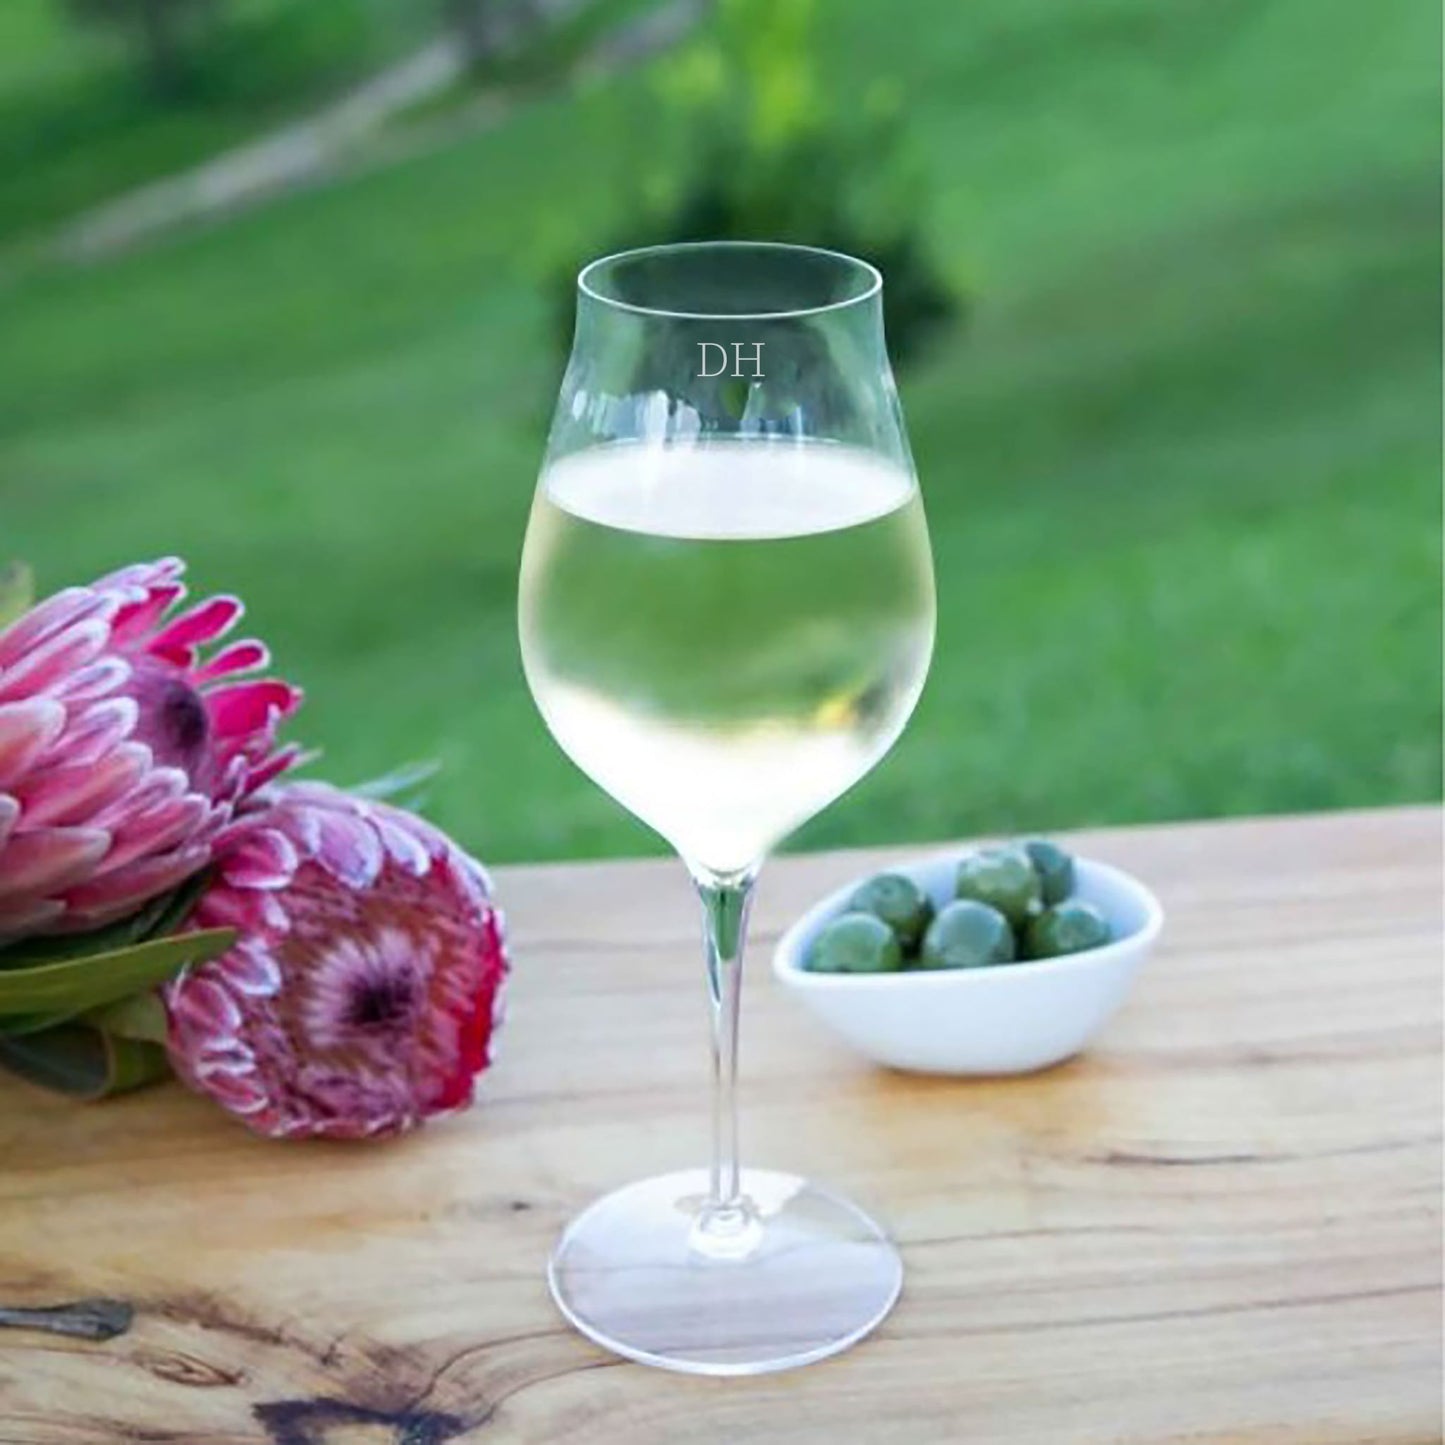 The Cabarita Contour Wine Glass